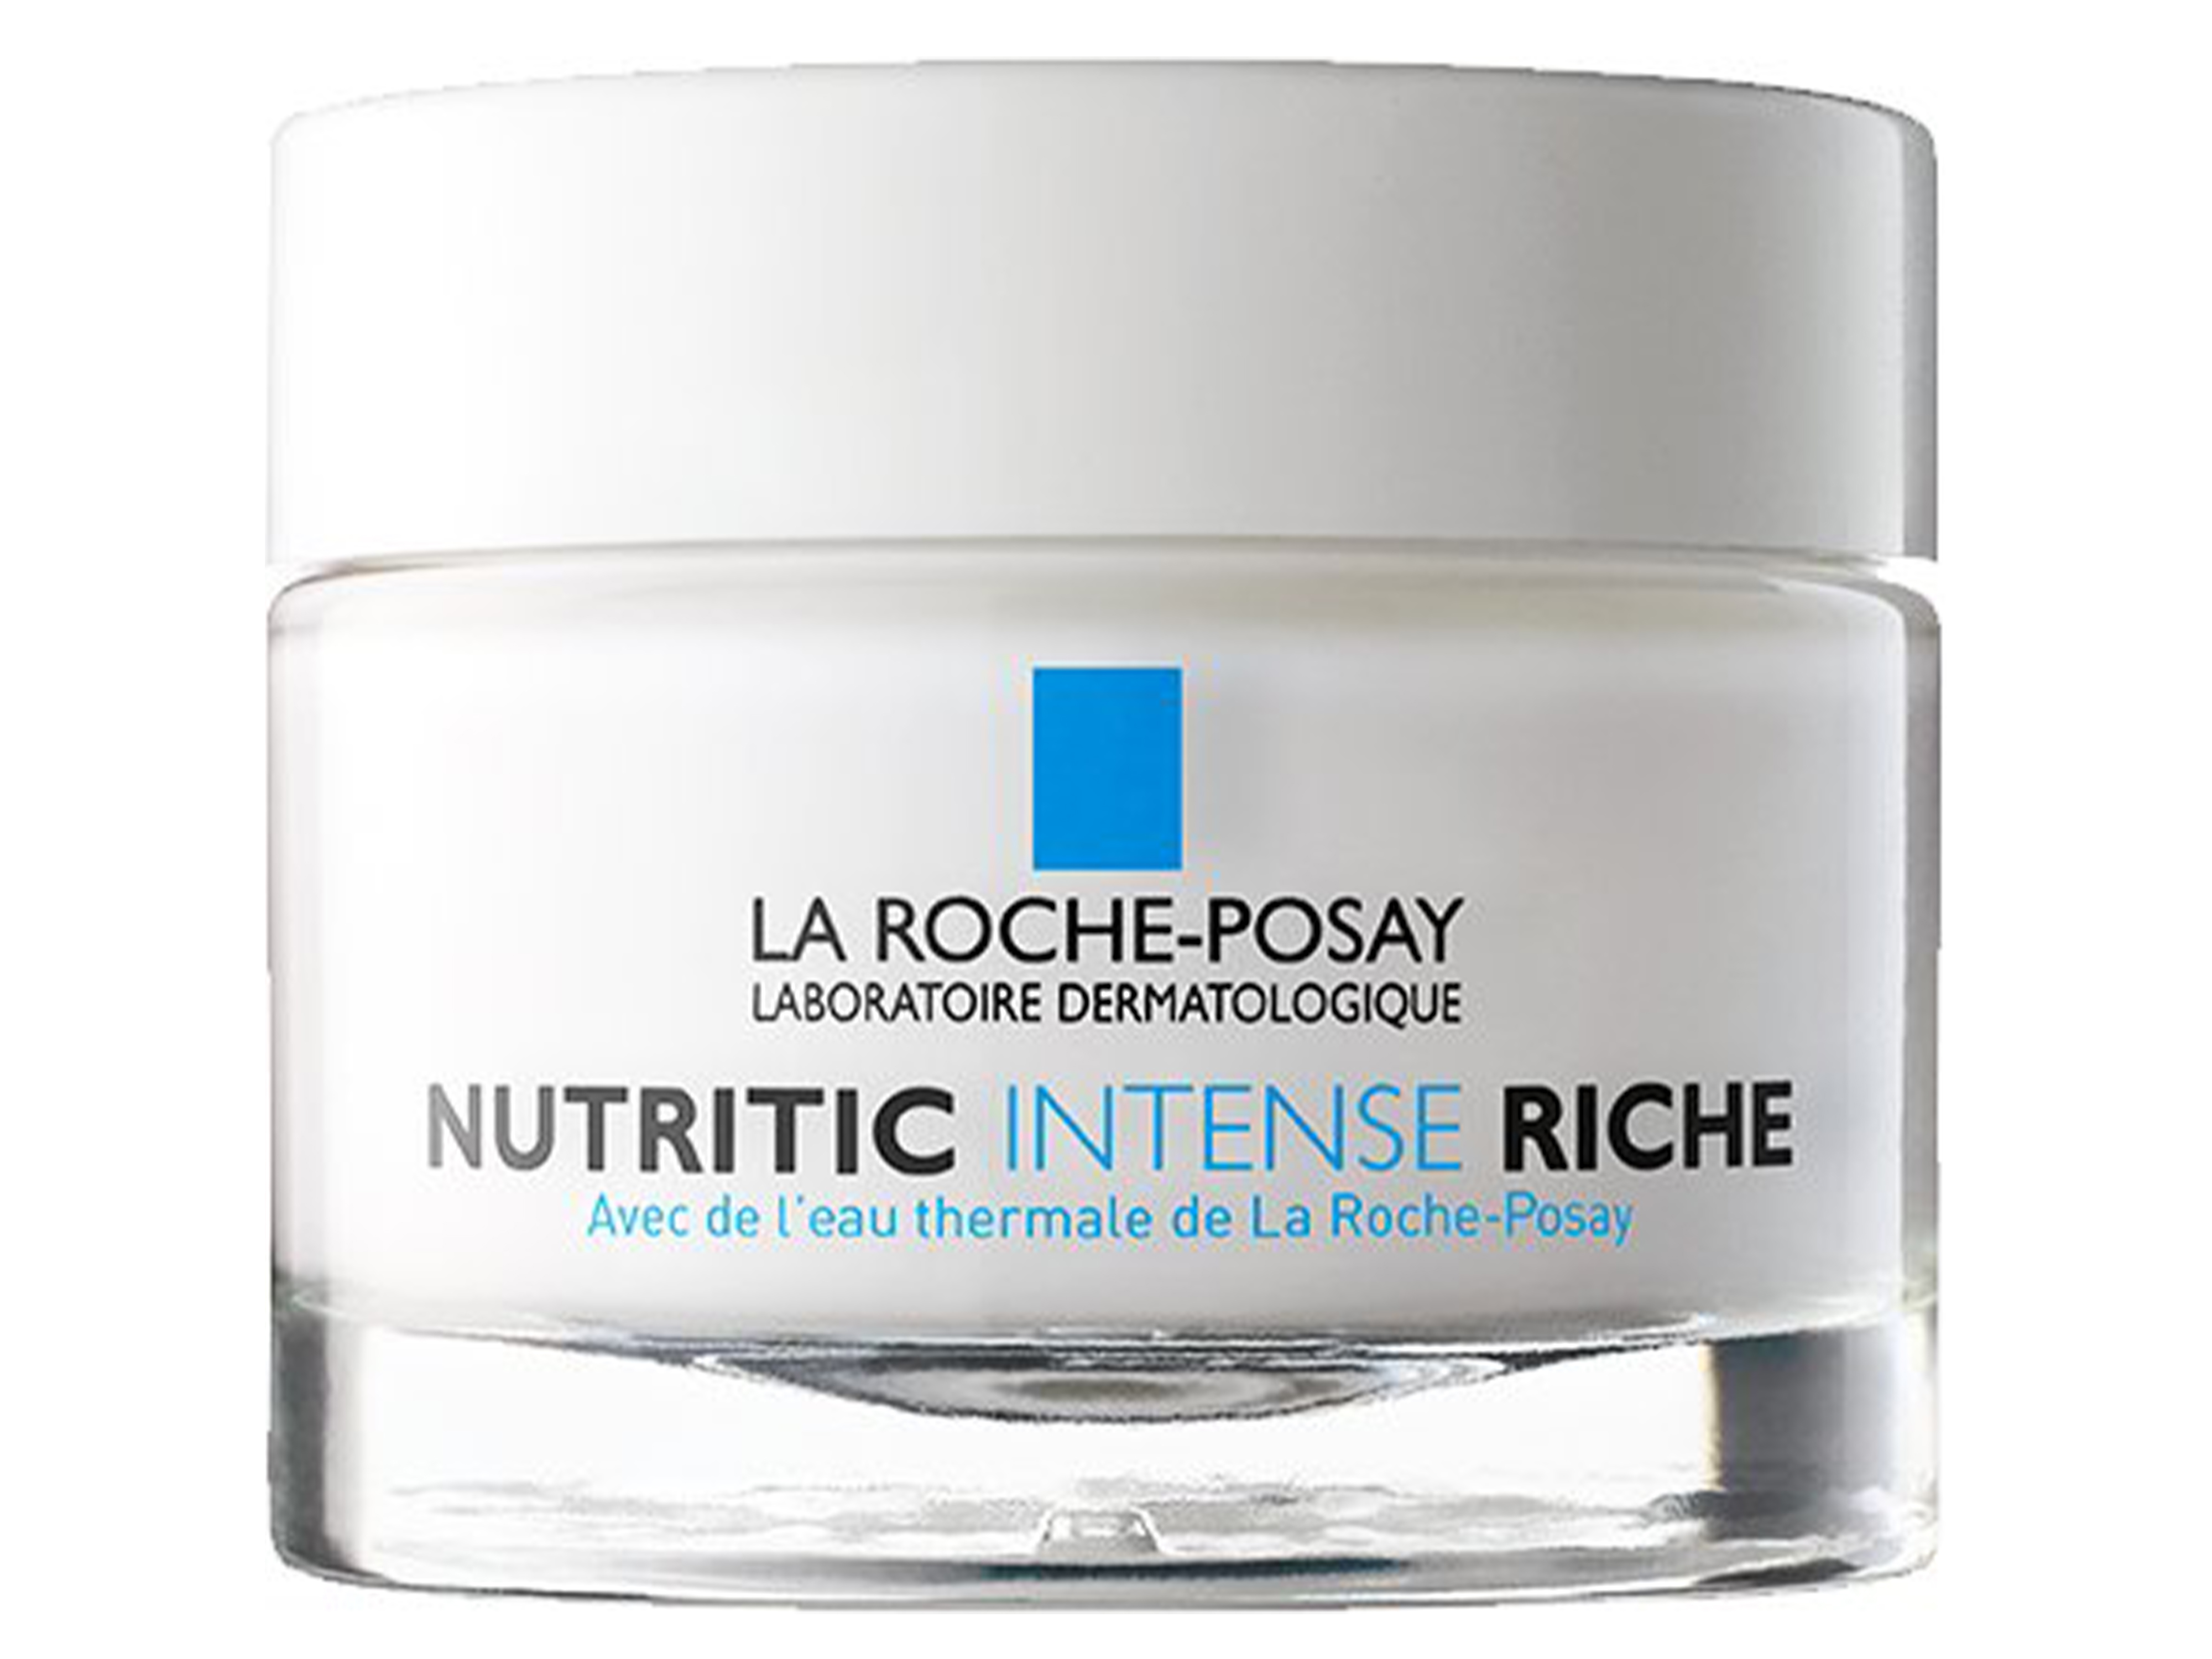 La Roche-Posay Nutritic intense rich, 50 ml